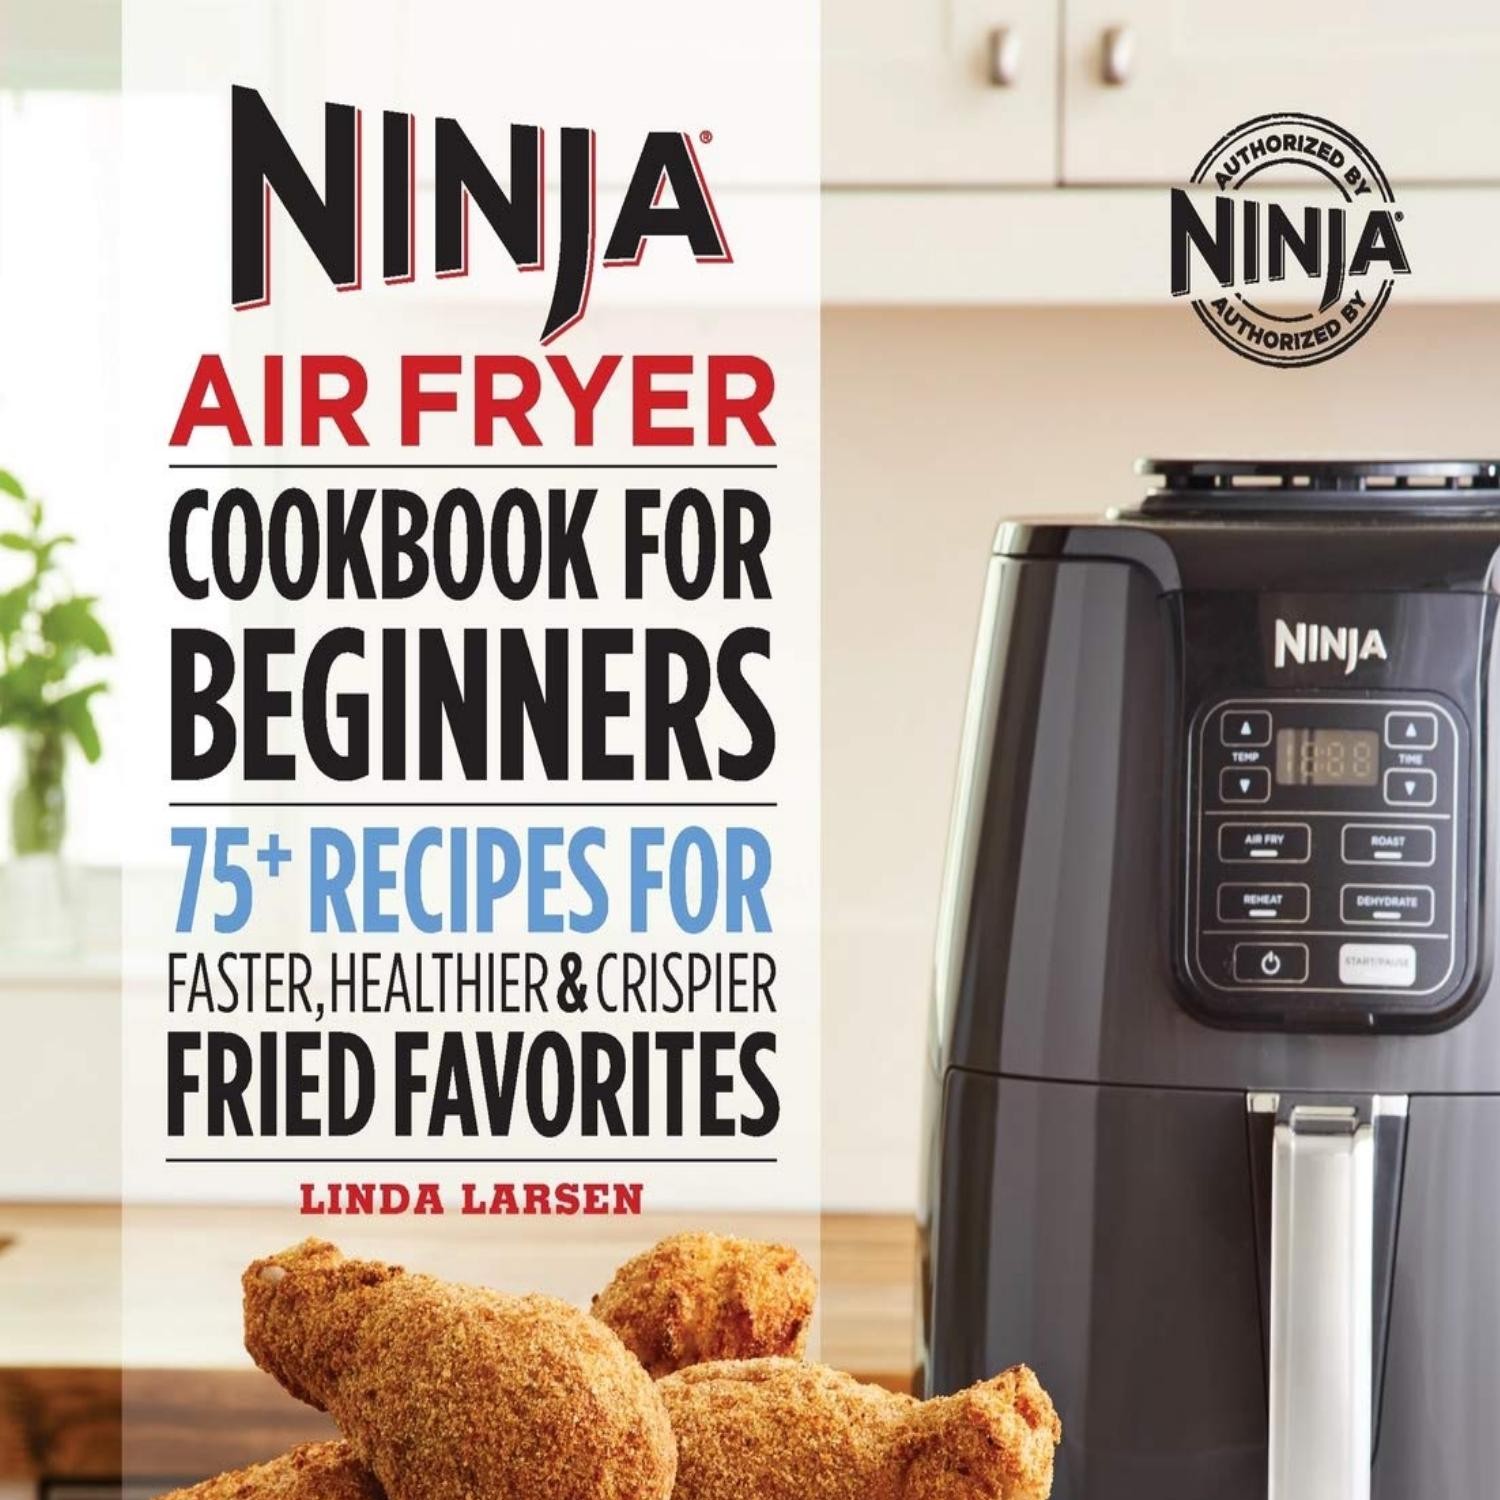 https://www.docdroid.net/thumbnail/HReTb6U/1500,1500/epub-ninja-air-fryer-cookbook-for-beginners-75-recipes-for-faster-healthier-pdf.jpg